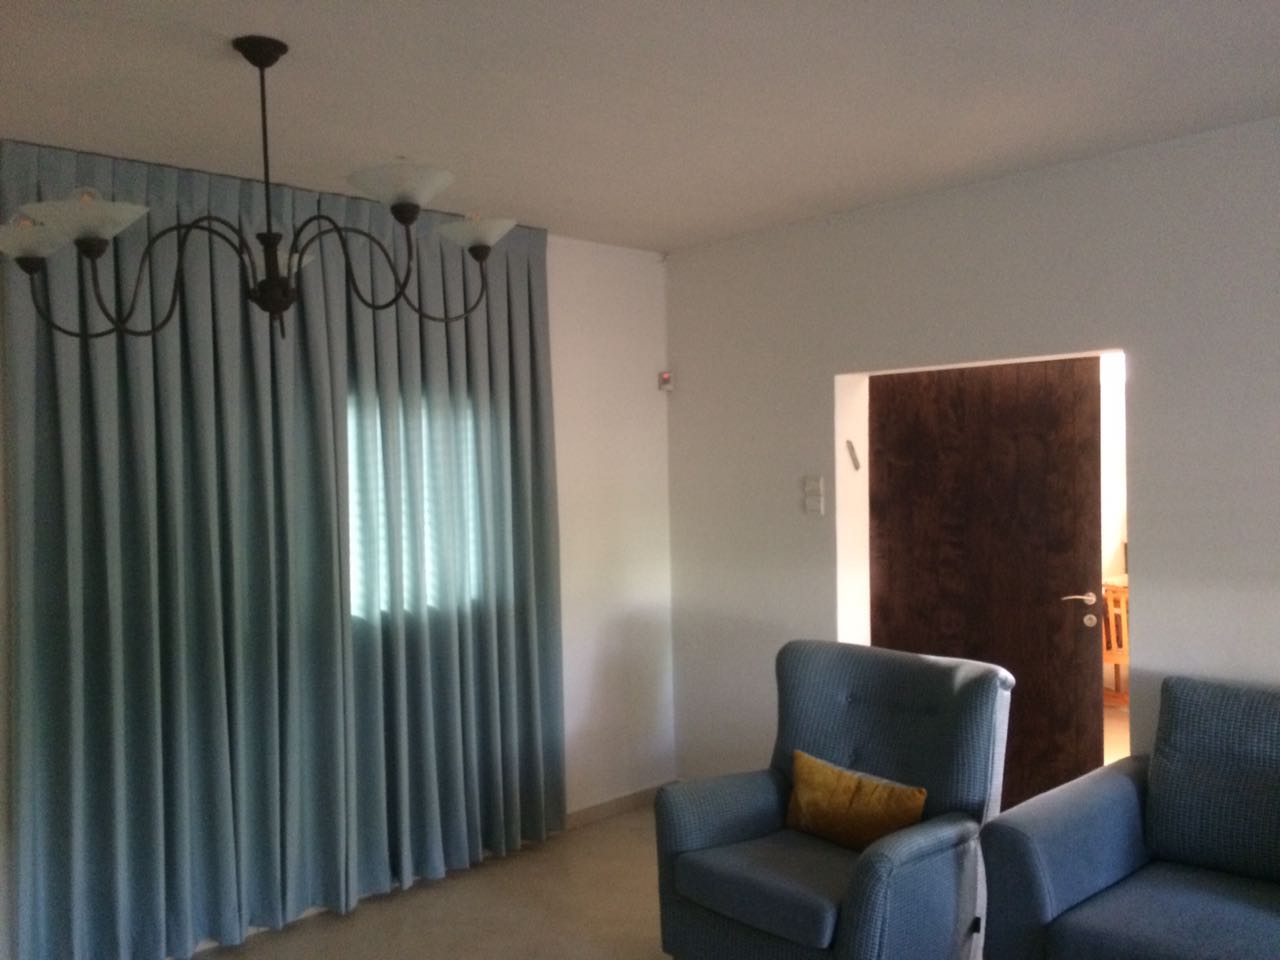 Living Room Shading Curtain